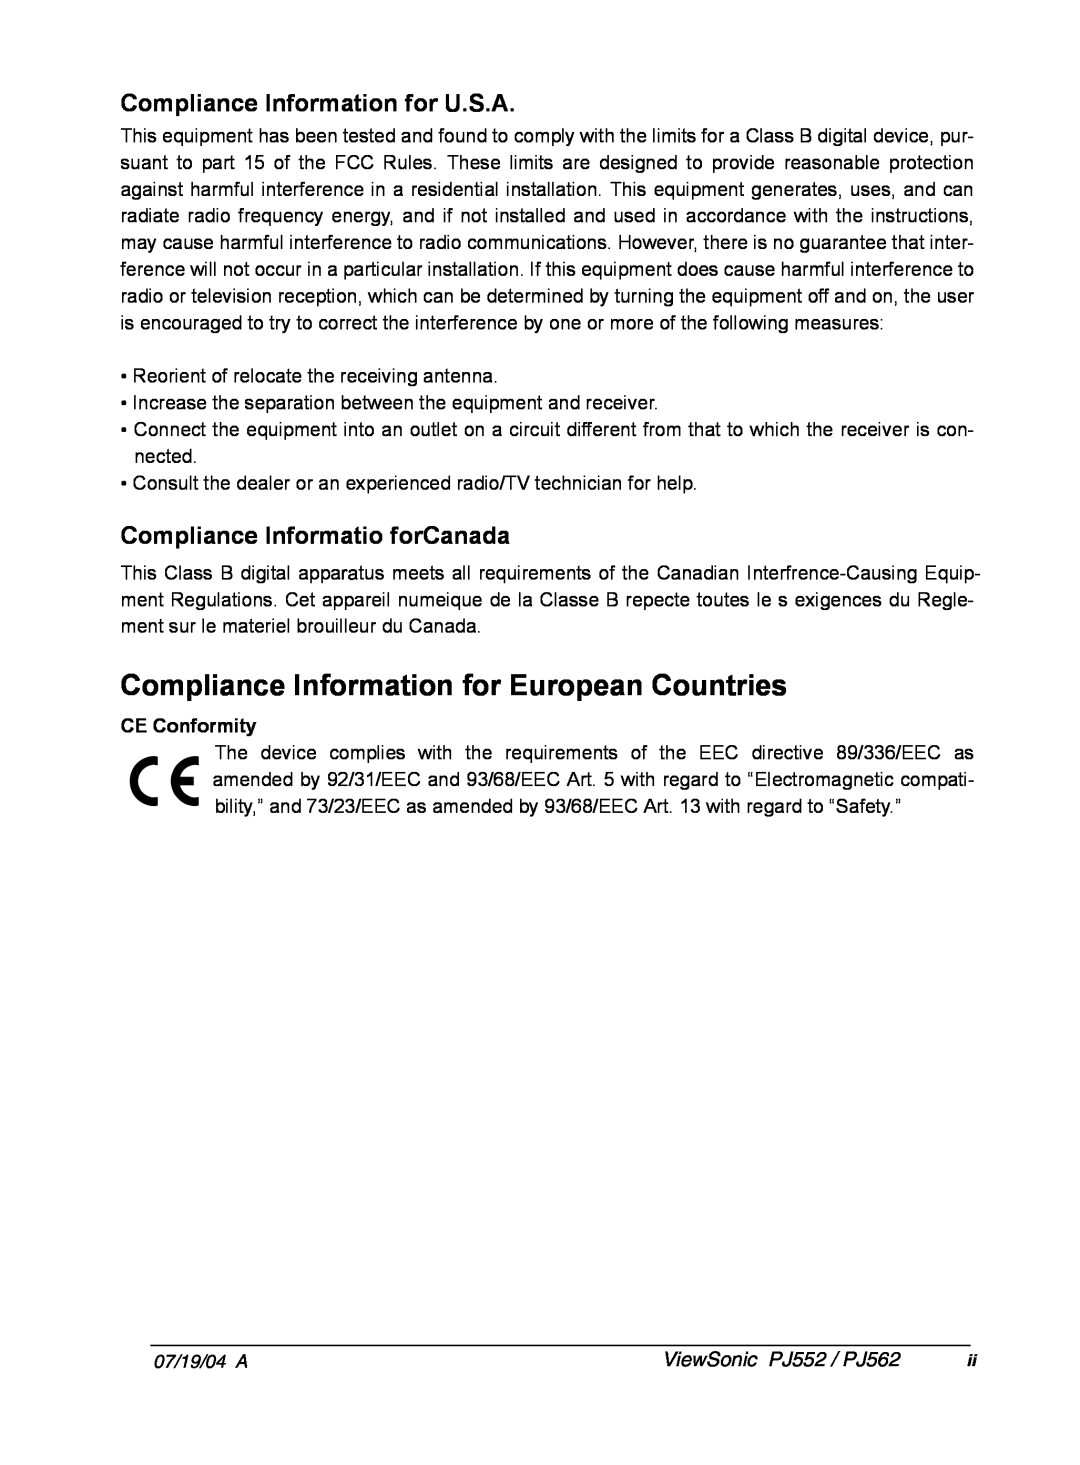 ViewSonic Compliance Information for U.S.A, Compliance Informatio forCanada, CE Conformity, ViewSonic PJ552 / PJ562 